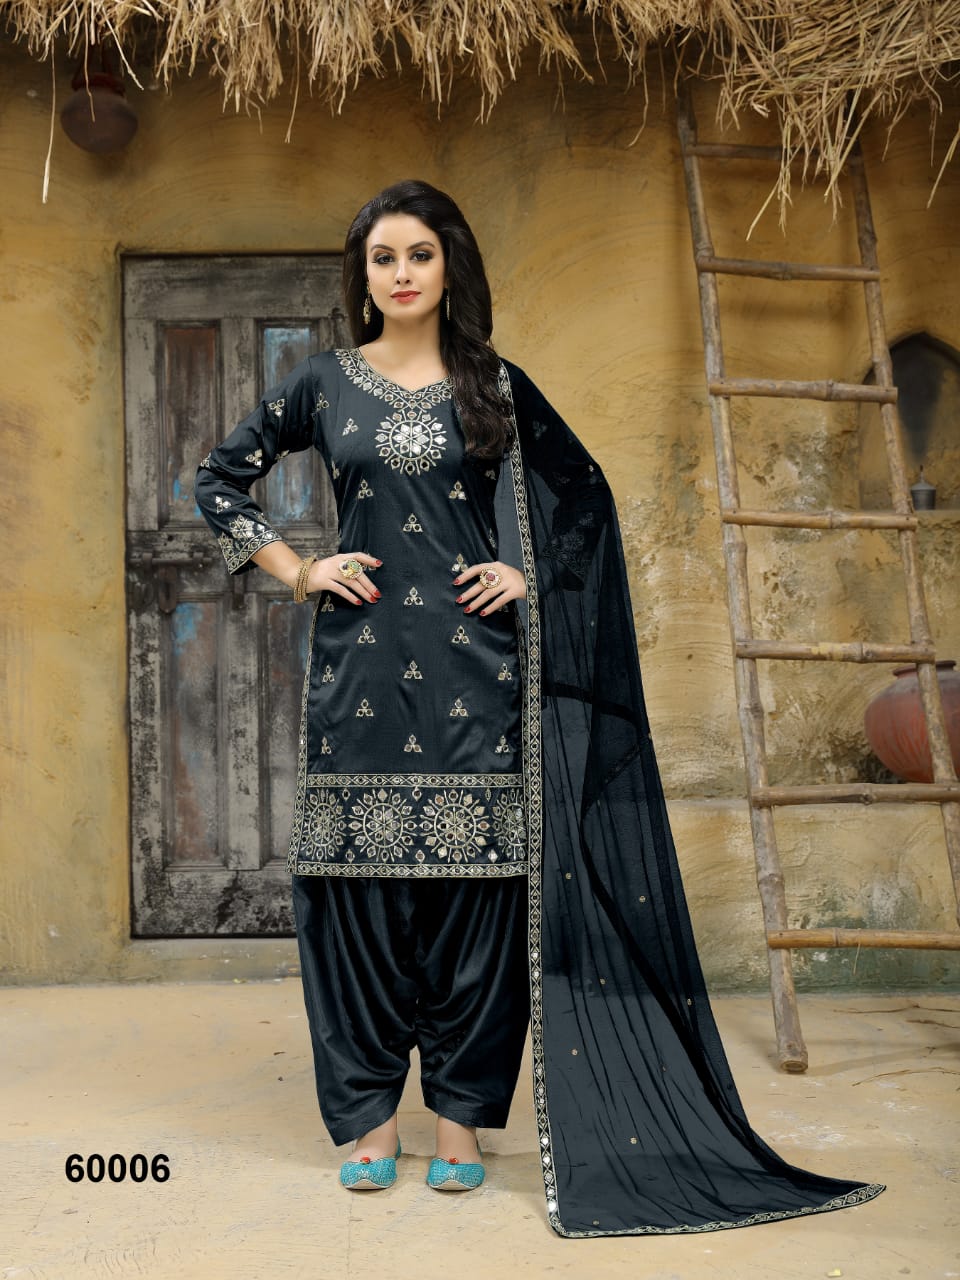 Aanaya presents 60000 semi casual wear salwar kameez concept